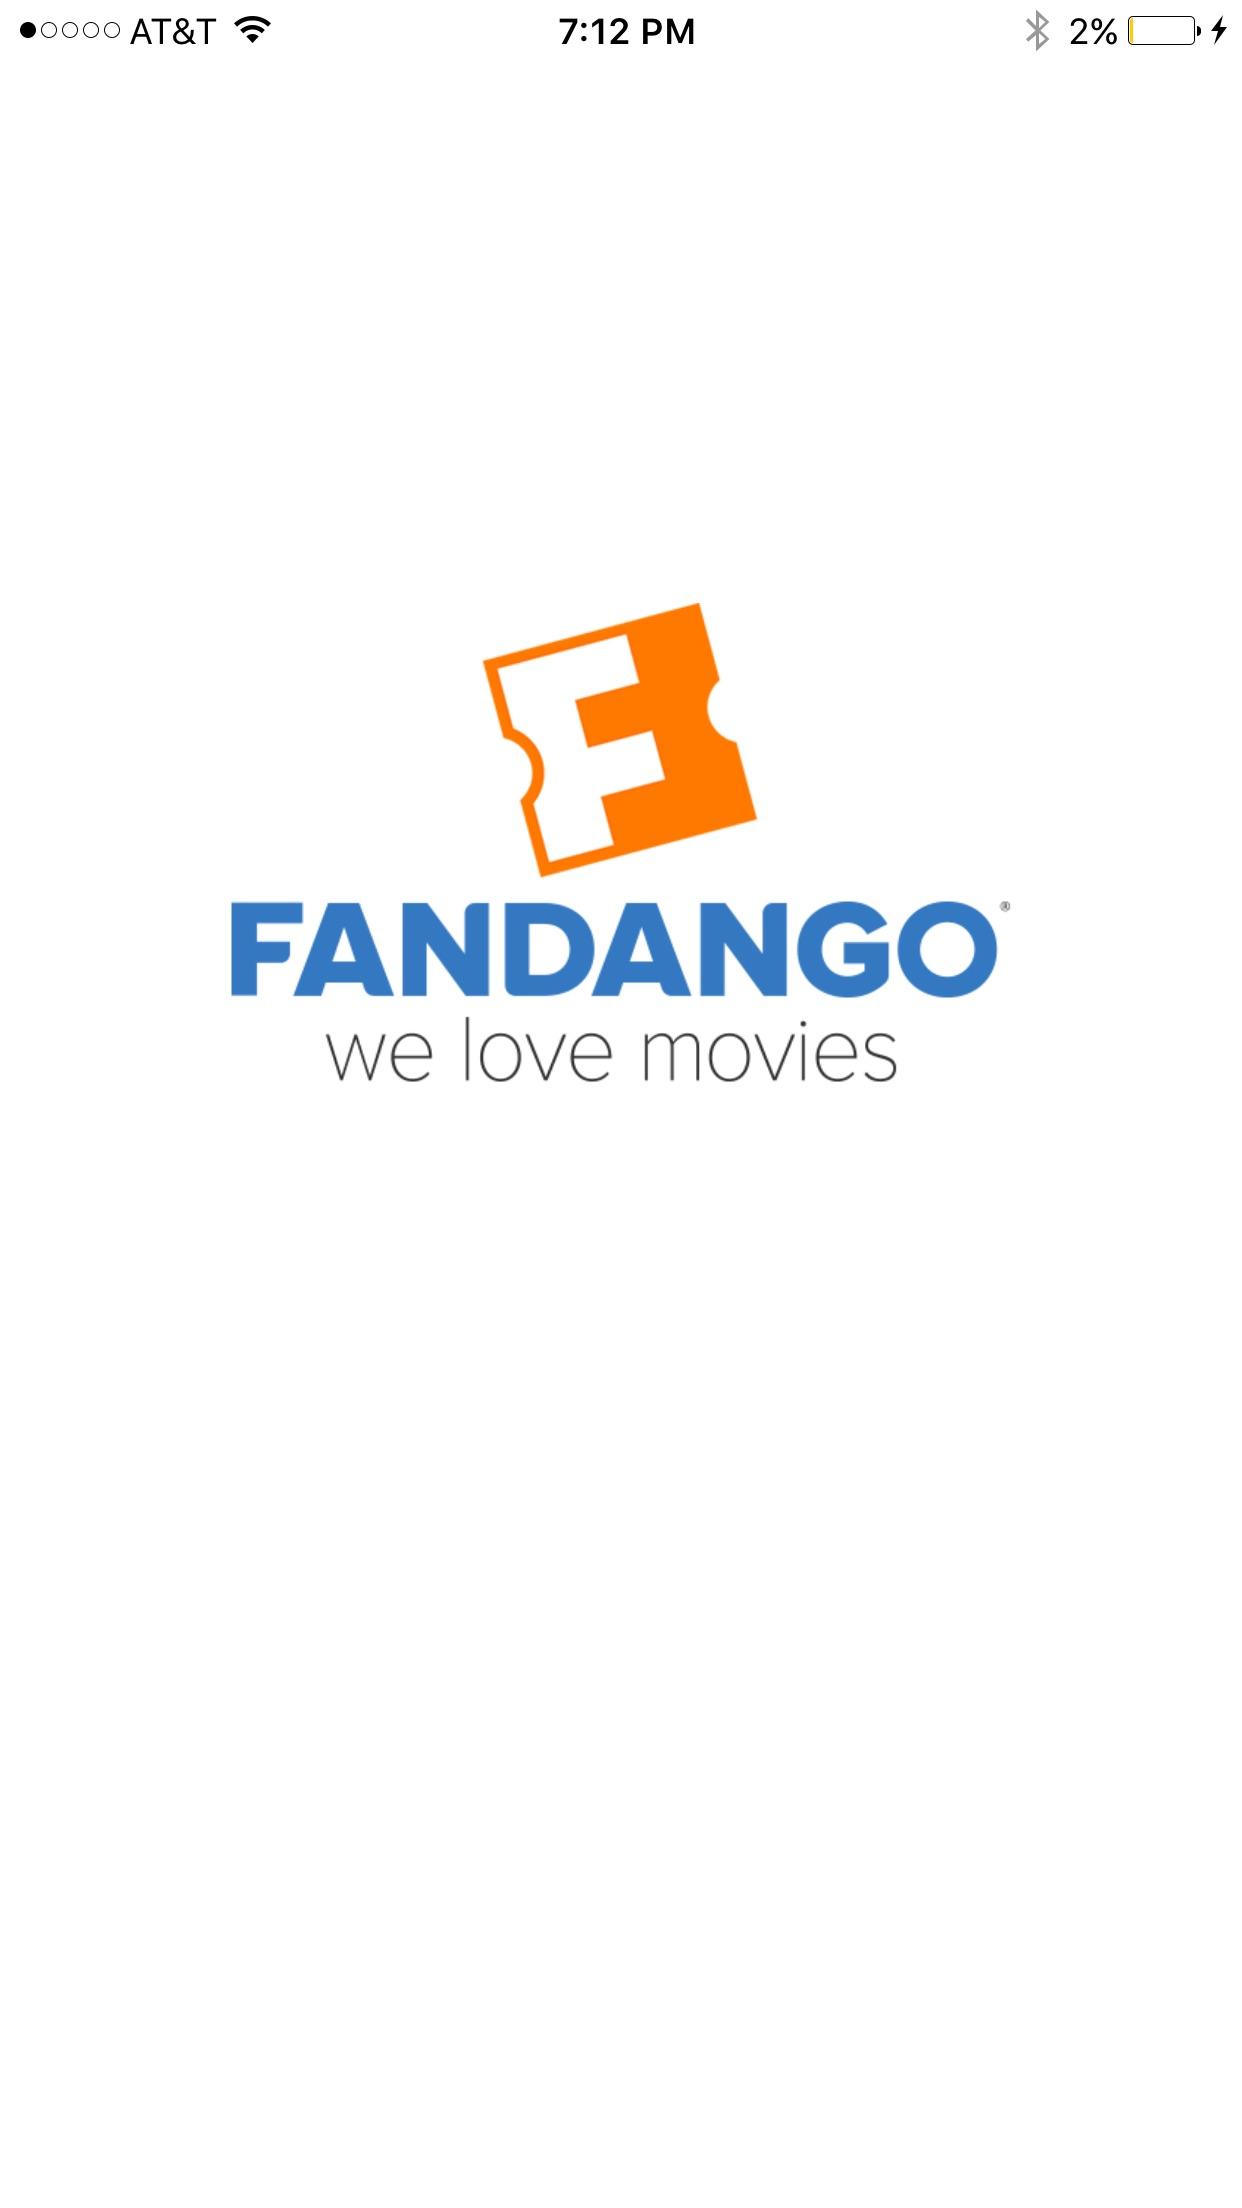 Upside Down F Logo - The fandango Logo is an F upside down too : mildlyinteresting